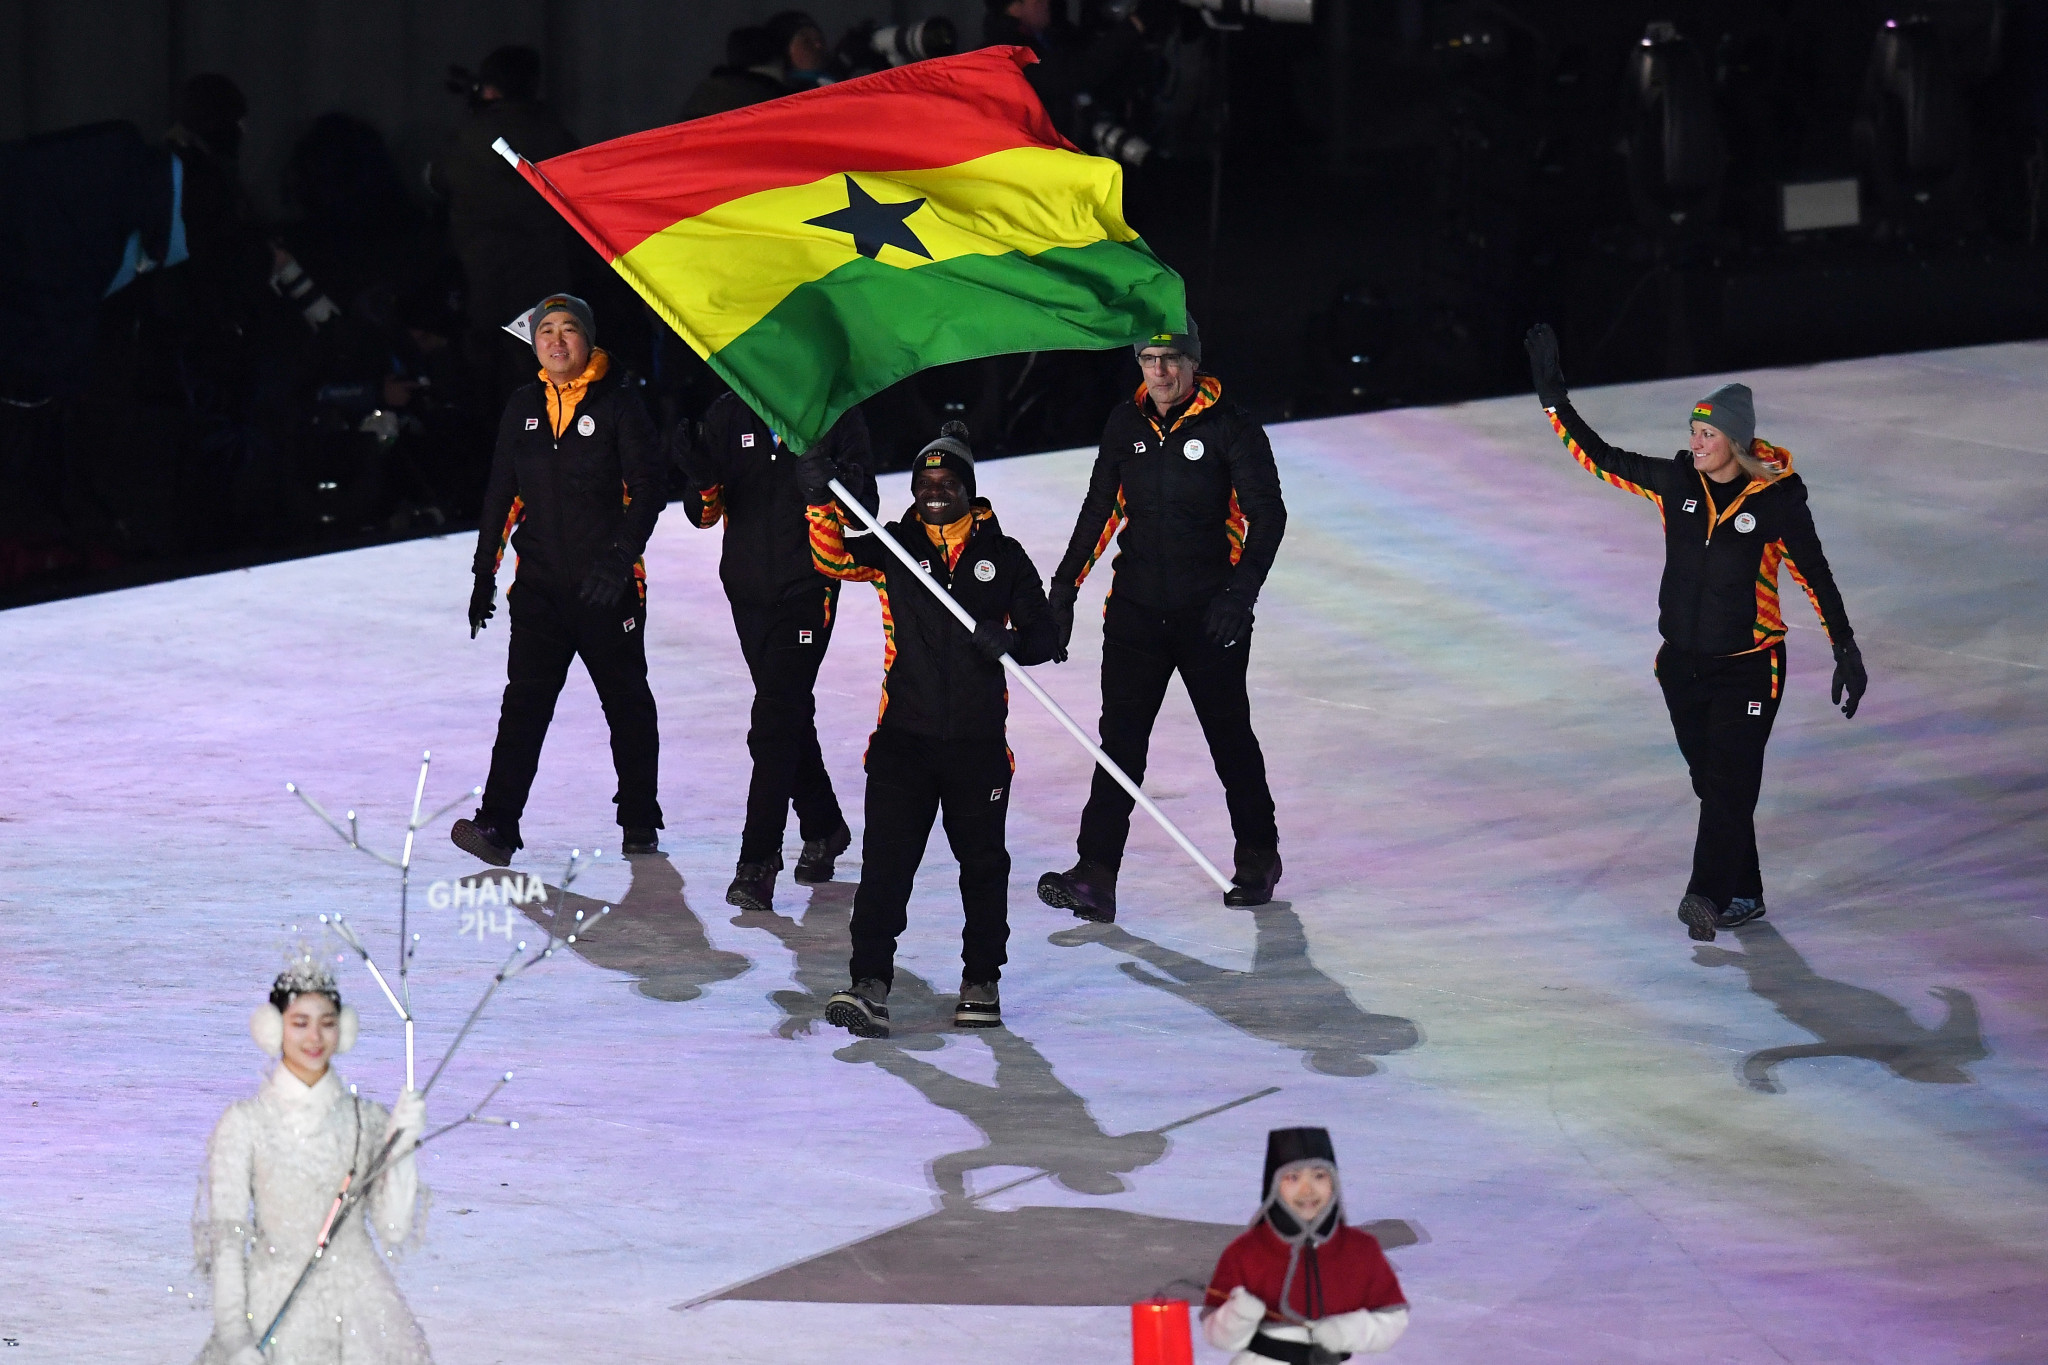 Ben Nunoo Mensah has been head of the Ghana Olympic Committee since 2017 ©Getty Images